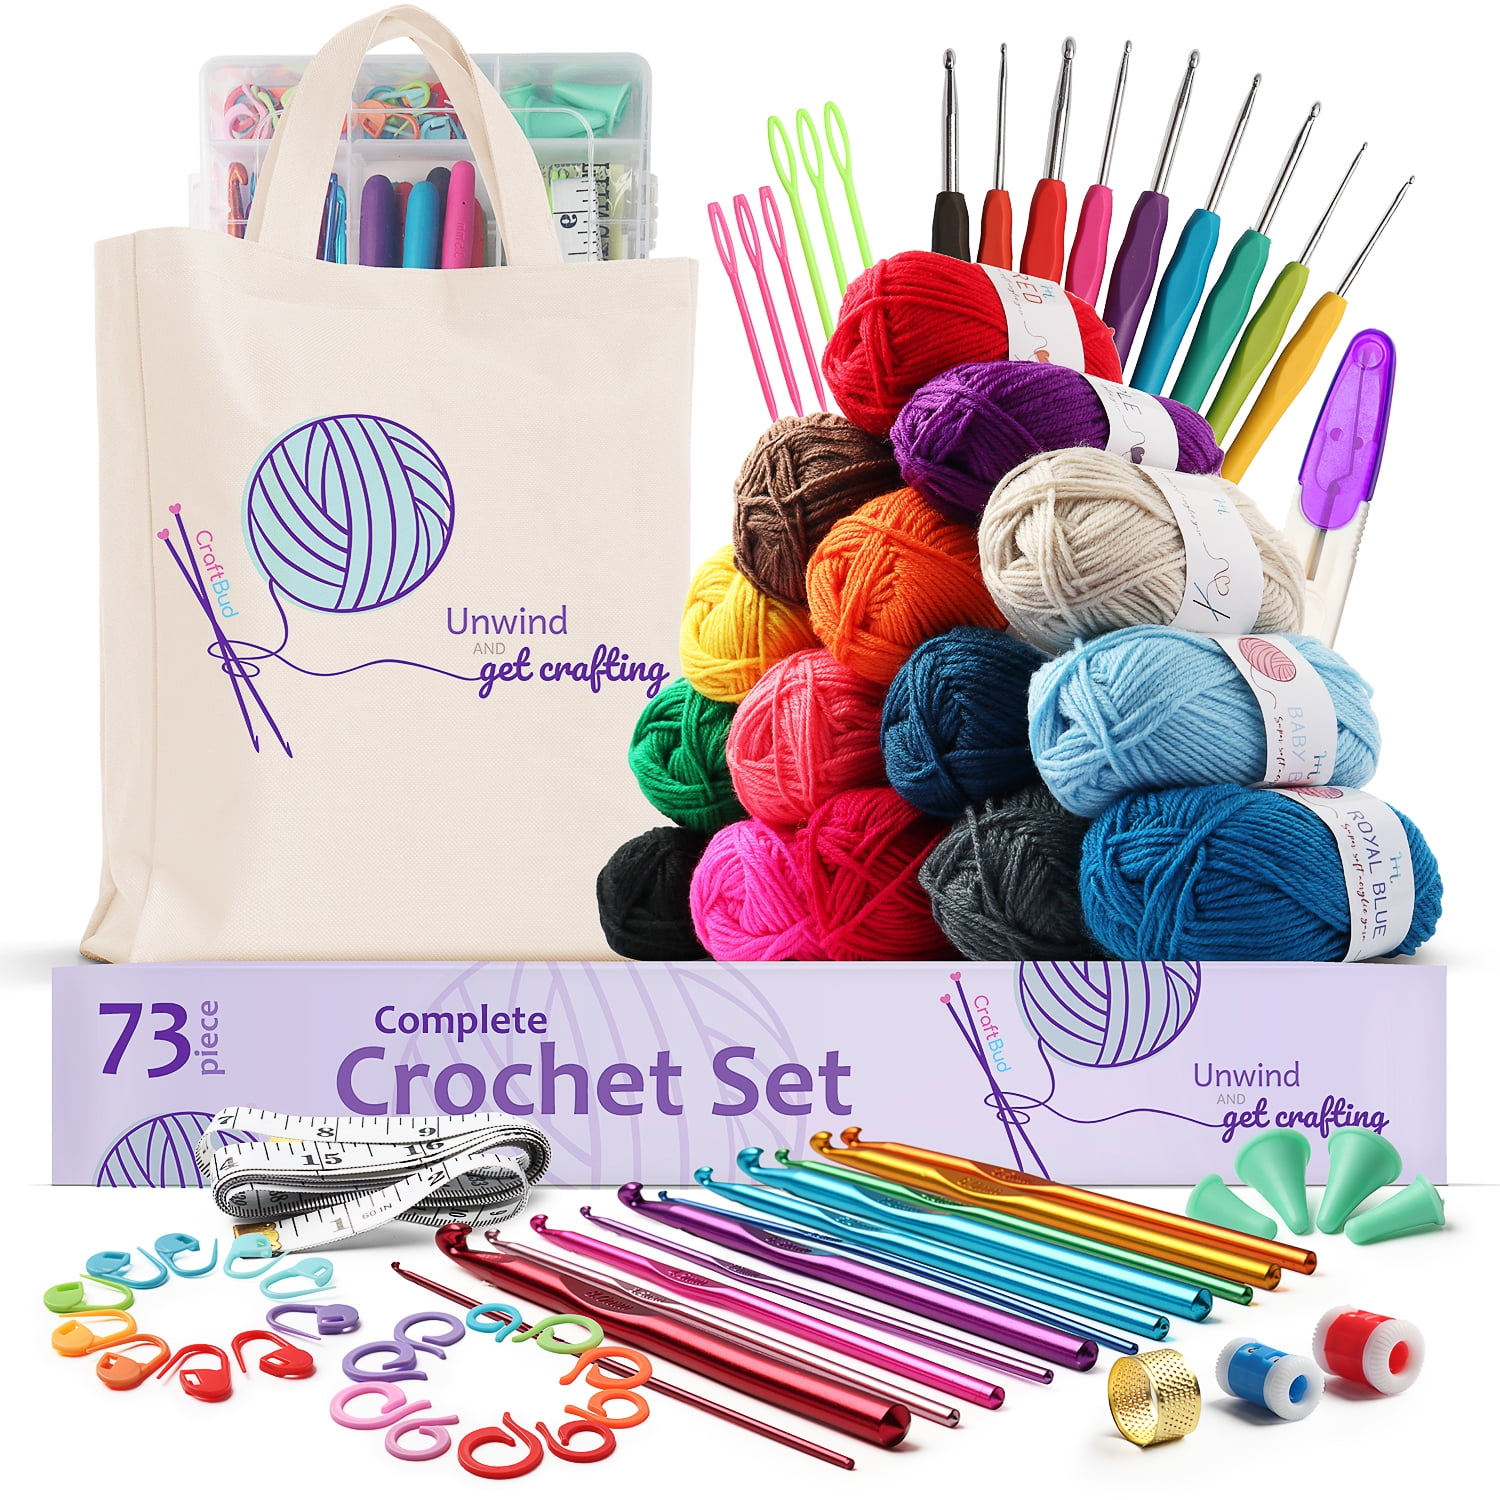 Crochet Art Crocheting Kit Ideal For Beginners Crafts Kit Kids Childs Toys Games 